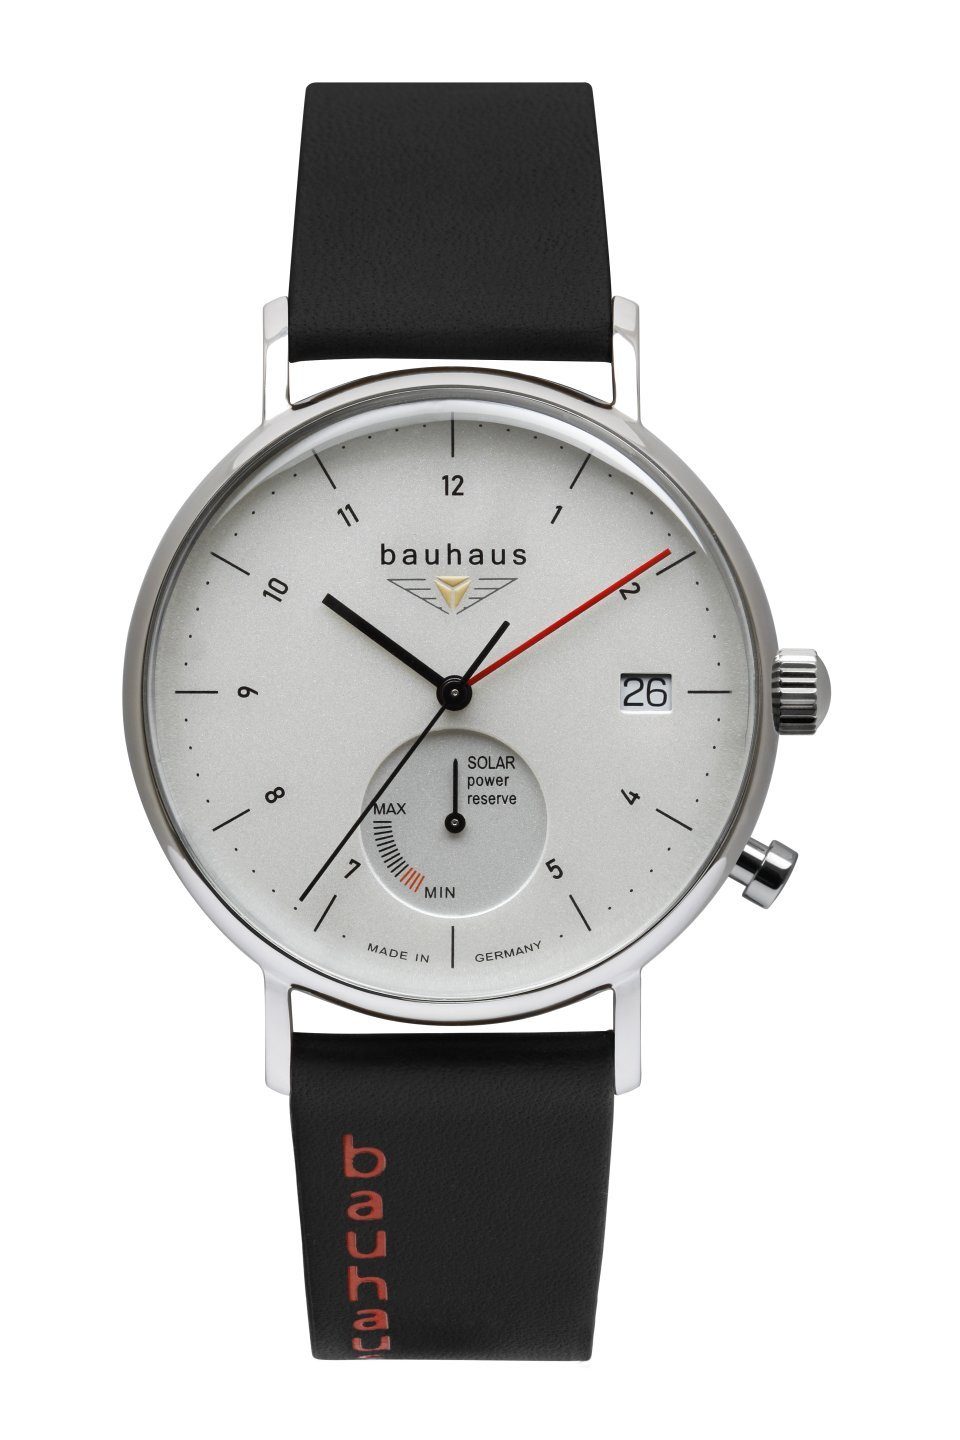 bauhaus Solaruhr 2112-1, Armbanduhr, Herrenuhr, Datum, Made in Germany